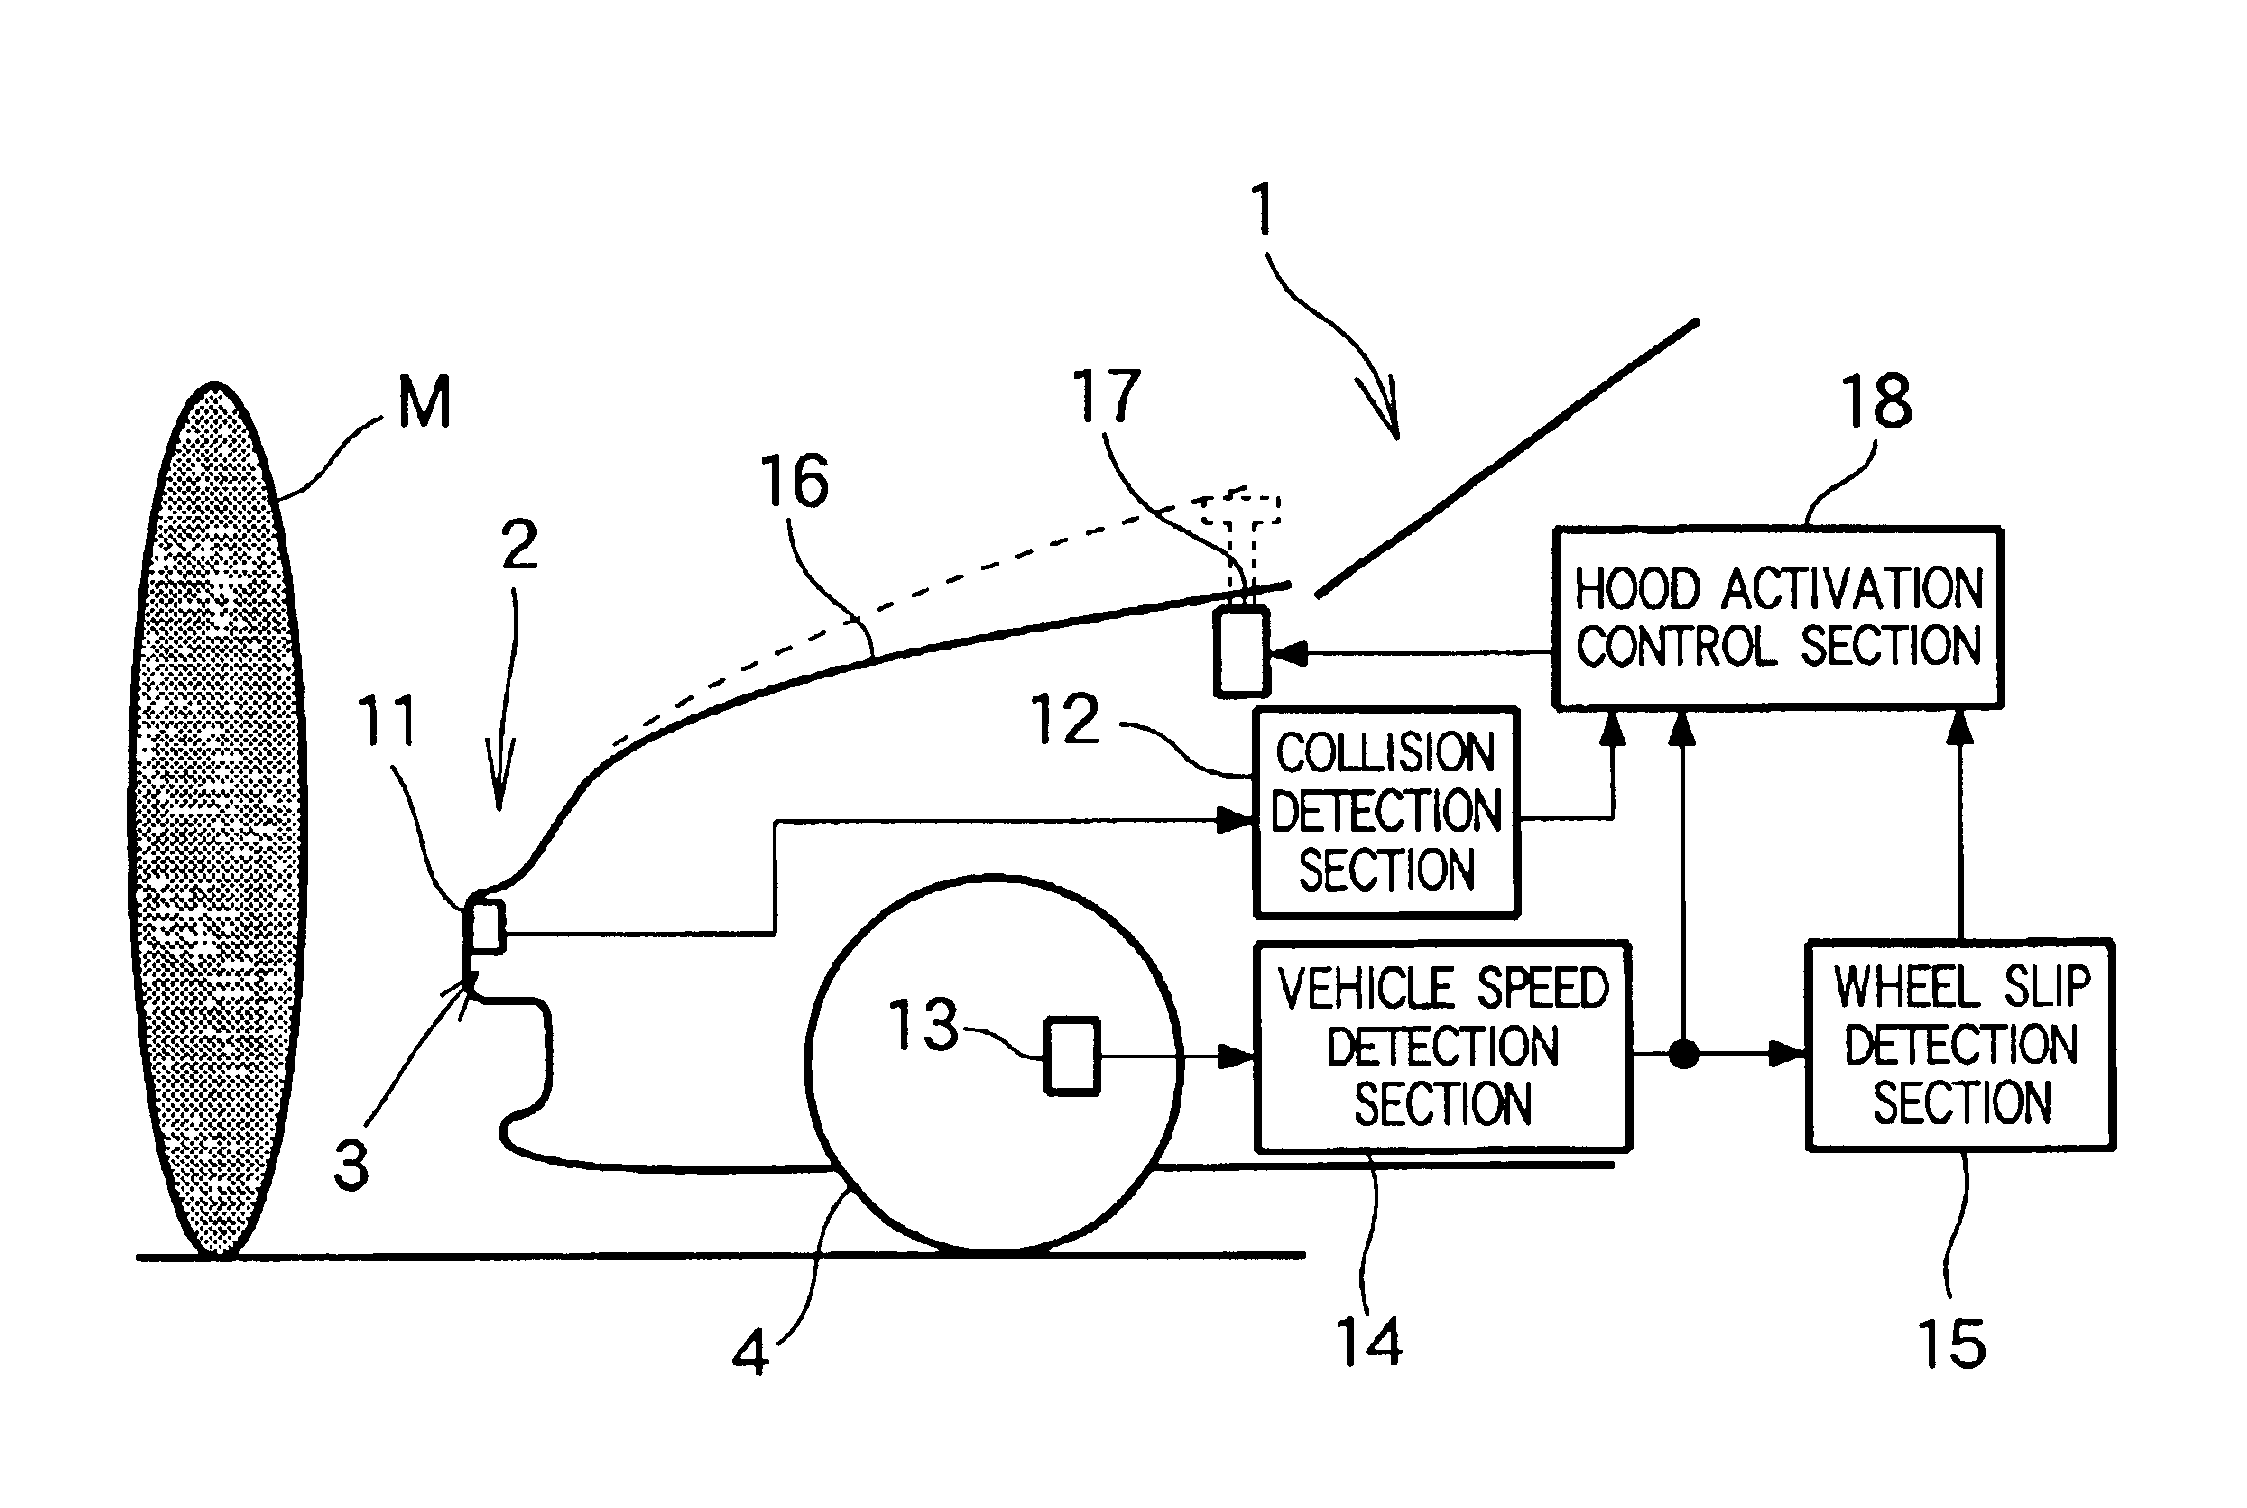 Vehicle hood control apparatus